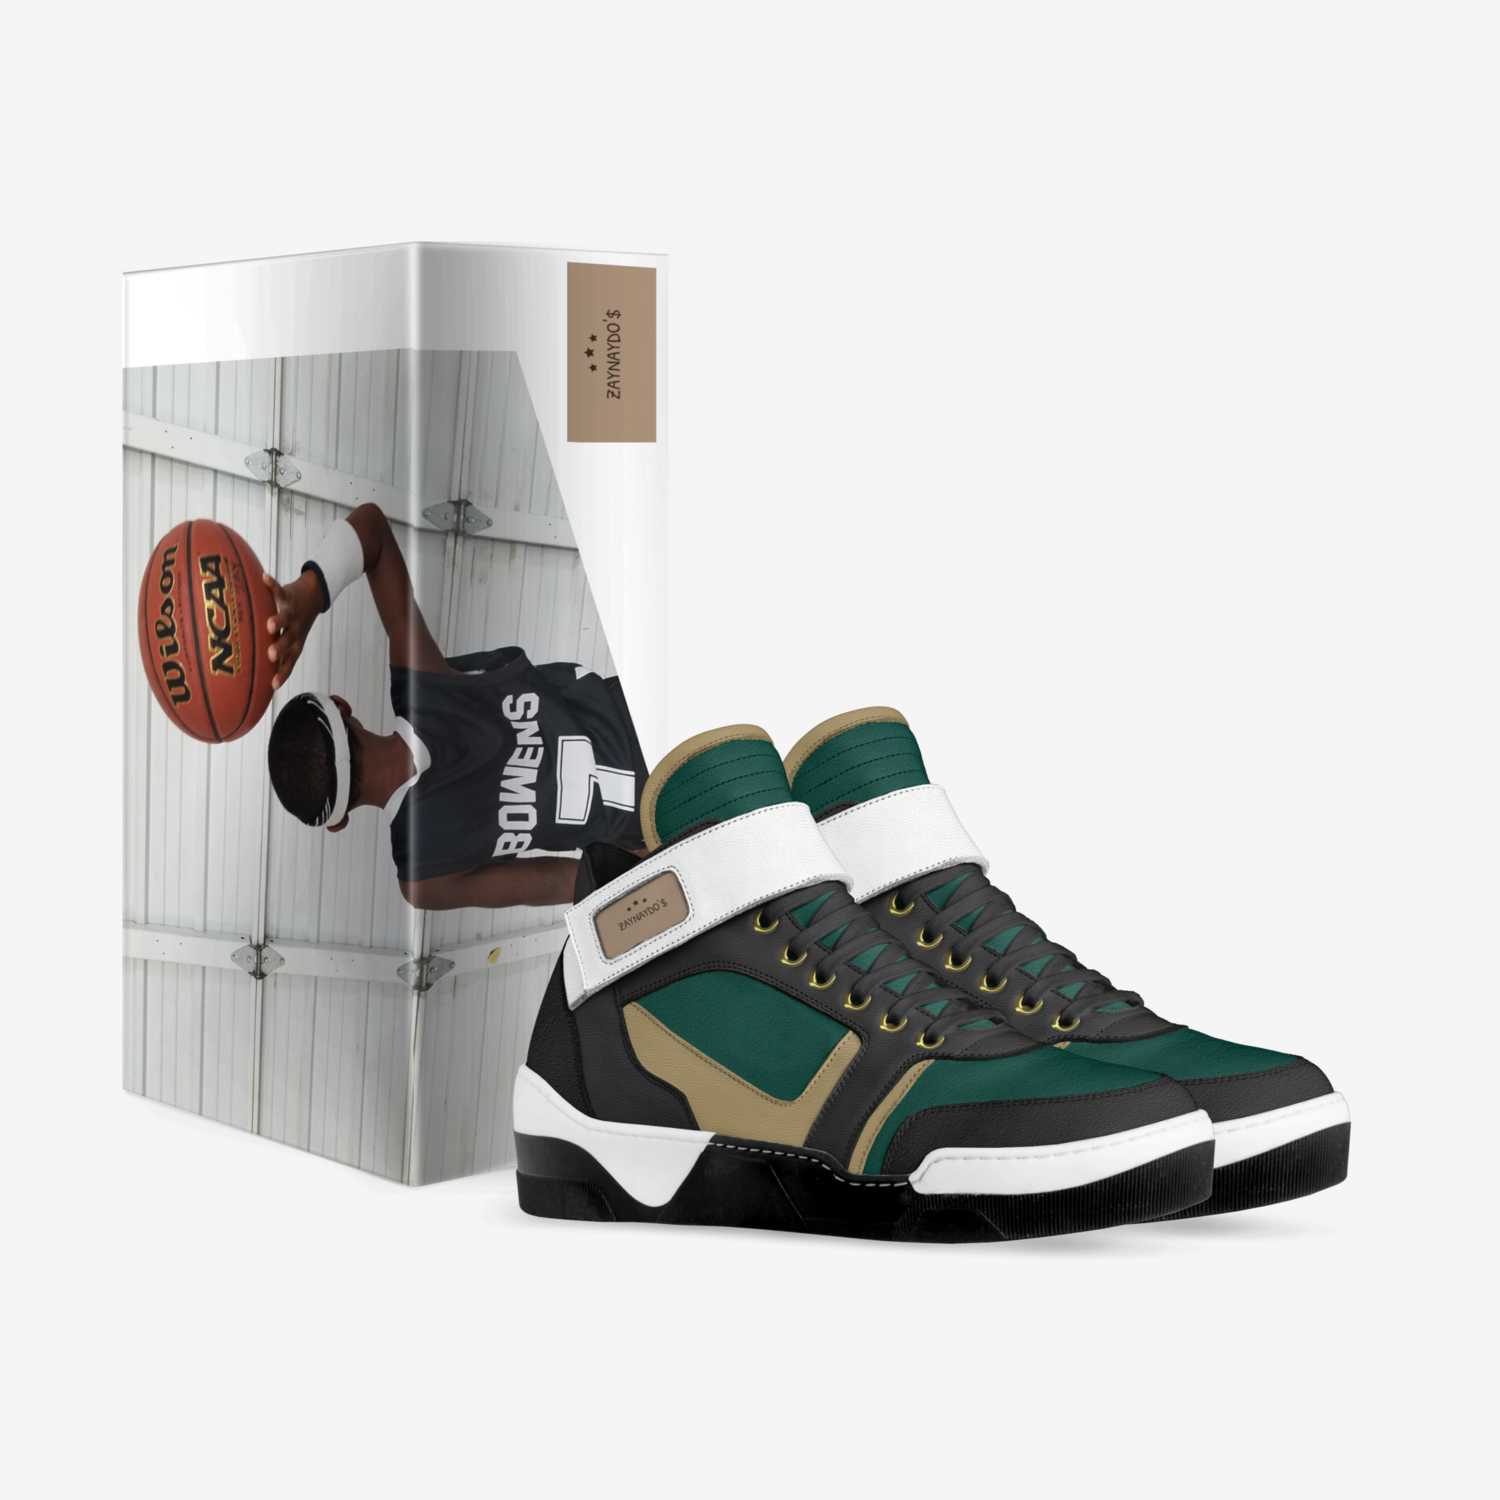 Zaynaydo'$ custom made in Italy shoes by Darren Bowens | Box view